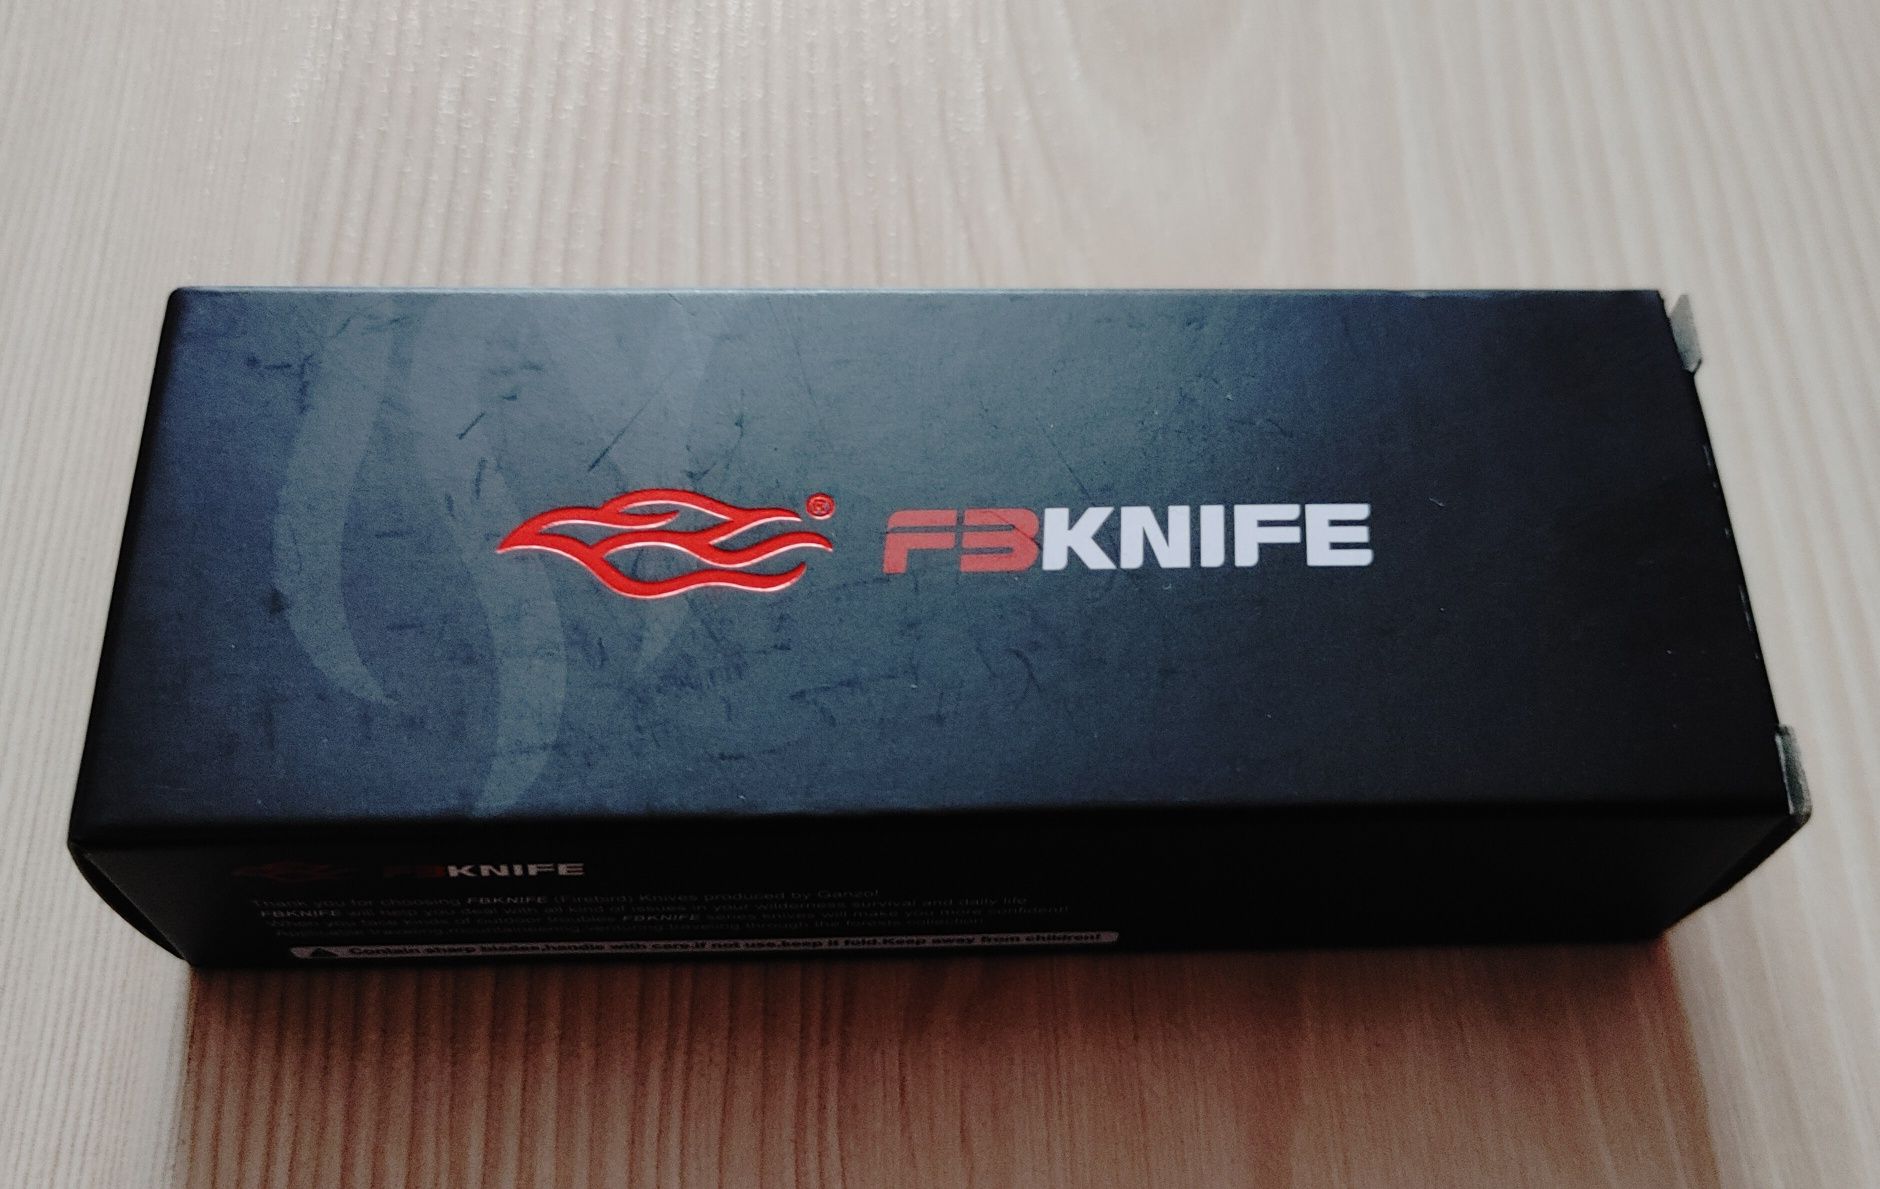 Nóż składany Ganzo Firebird FH21-GB, nóż EDC